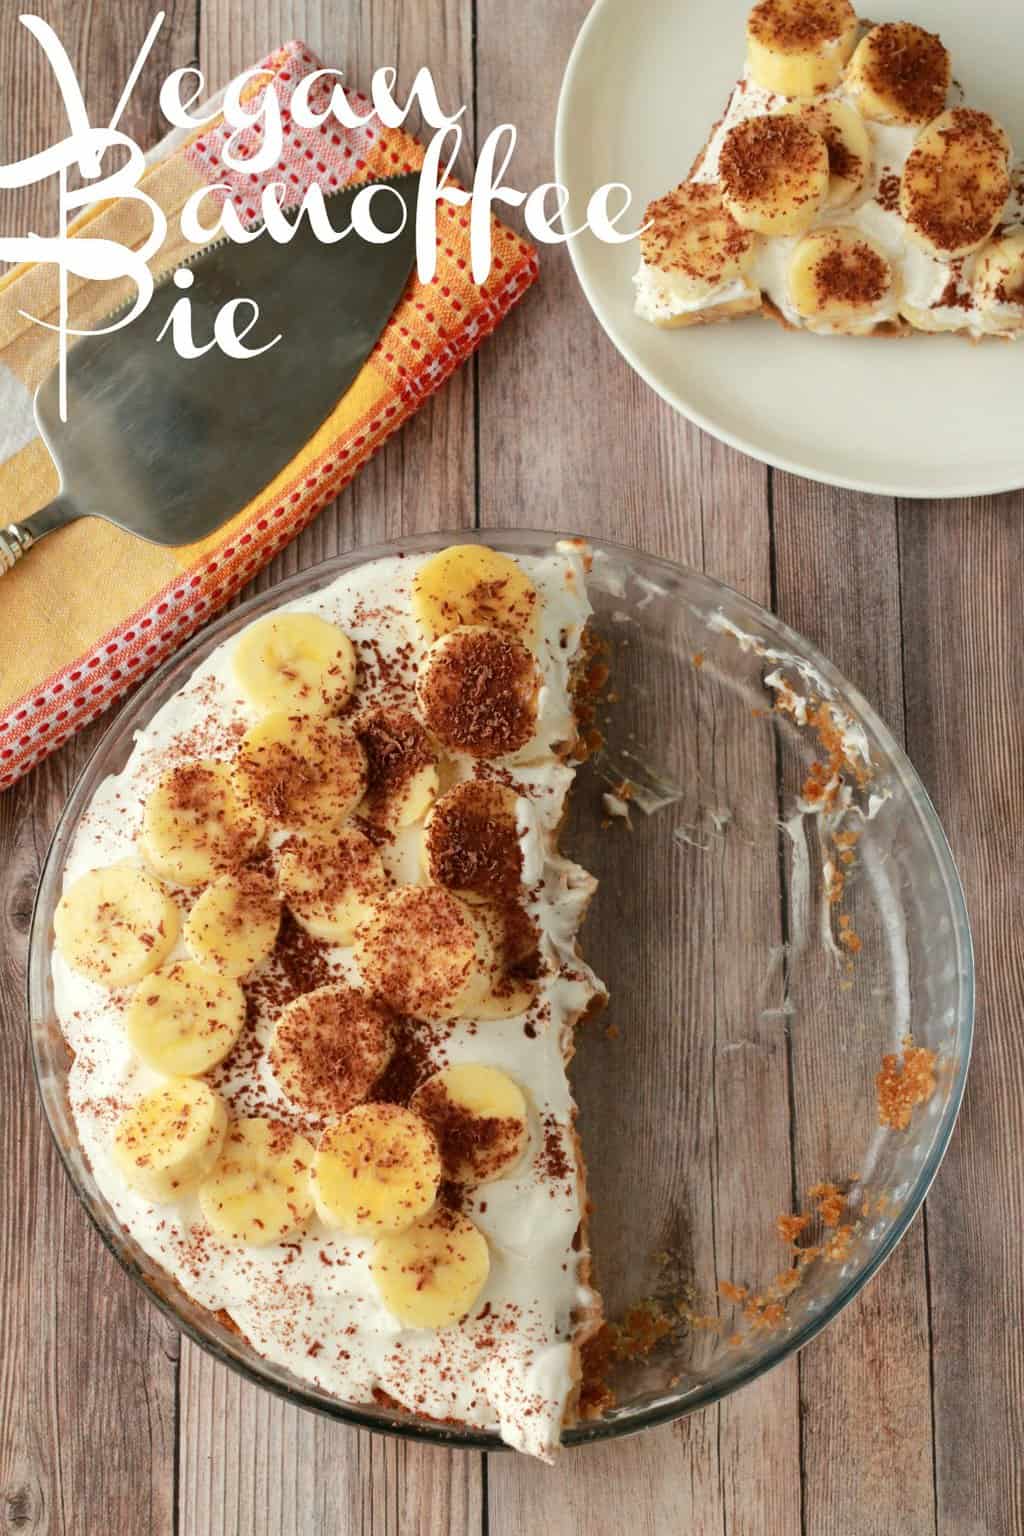 Raw Vegan Banoffee Pie. Insanely delicious and gluten-free! #vegan #lovingitvegan #rawvegan #dairyfree #dessert